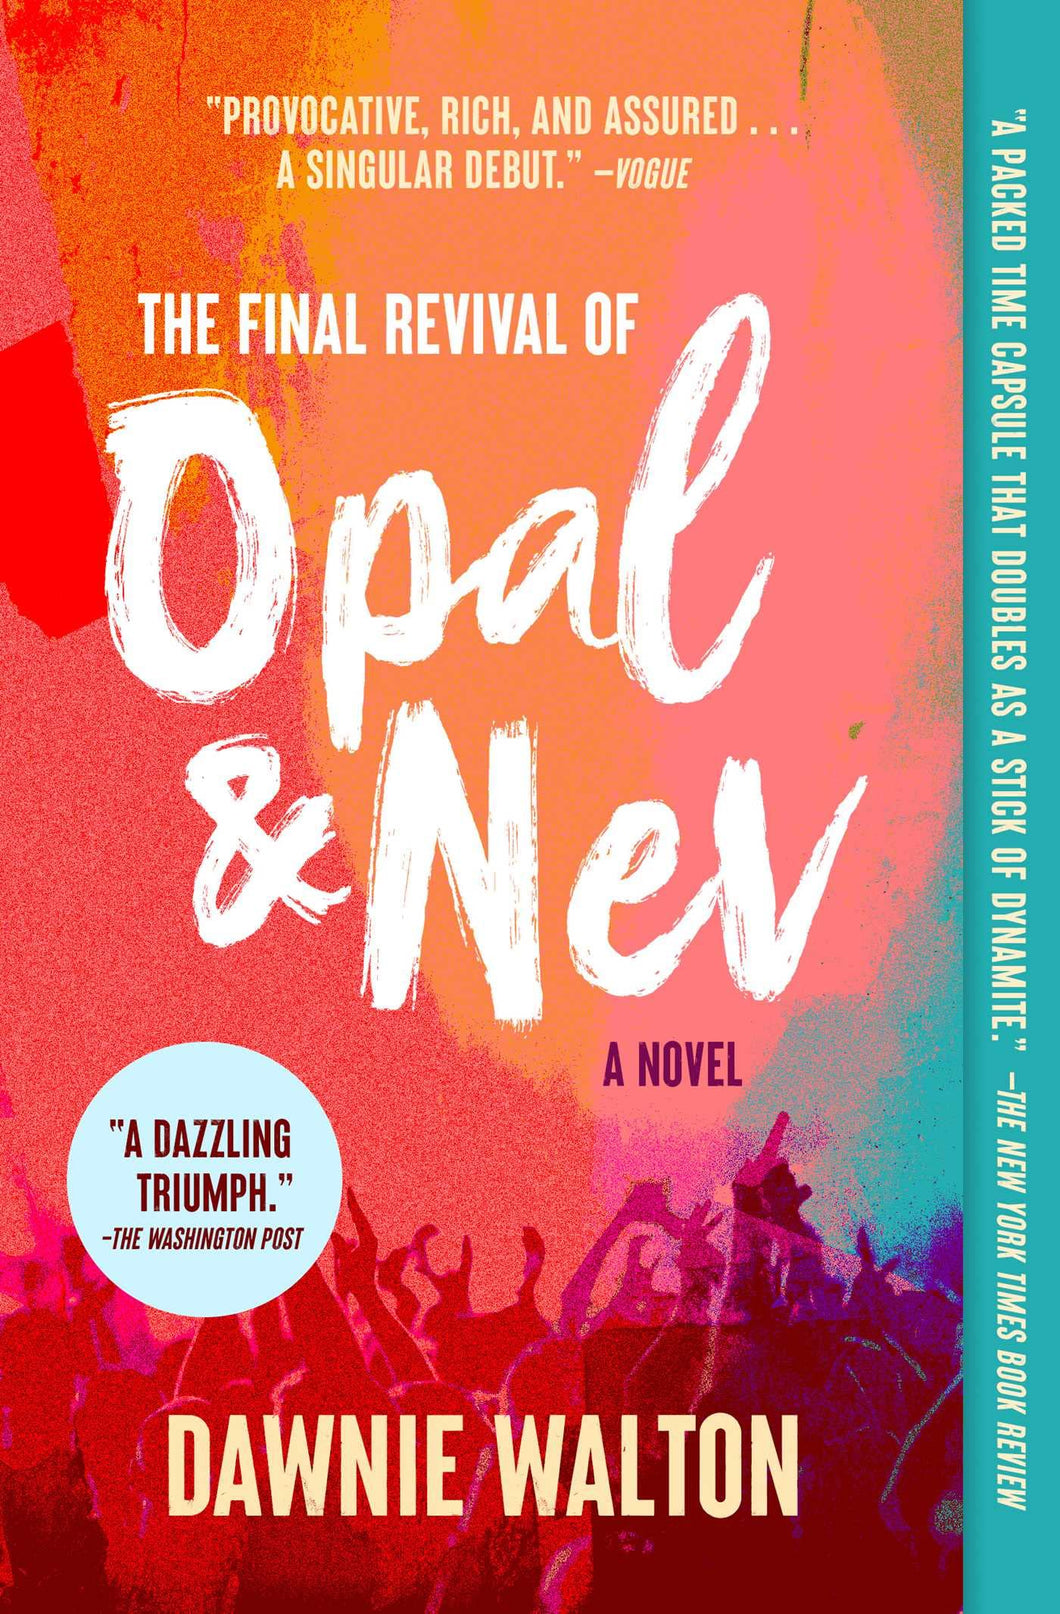 The Final Revival Of Opal & Nev [Dawnie Walton]